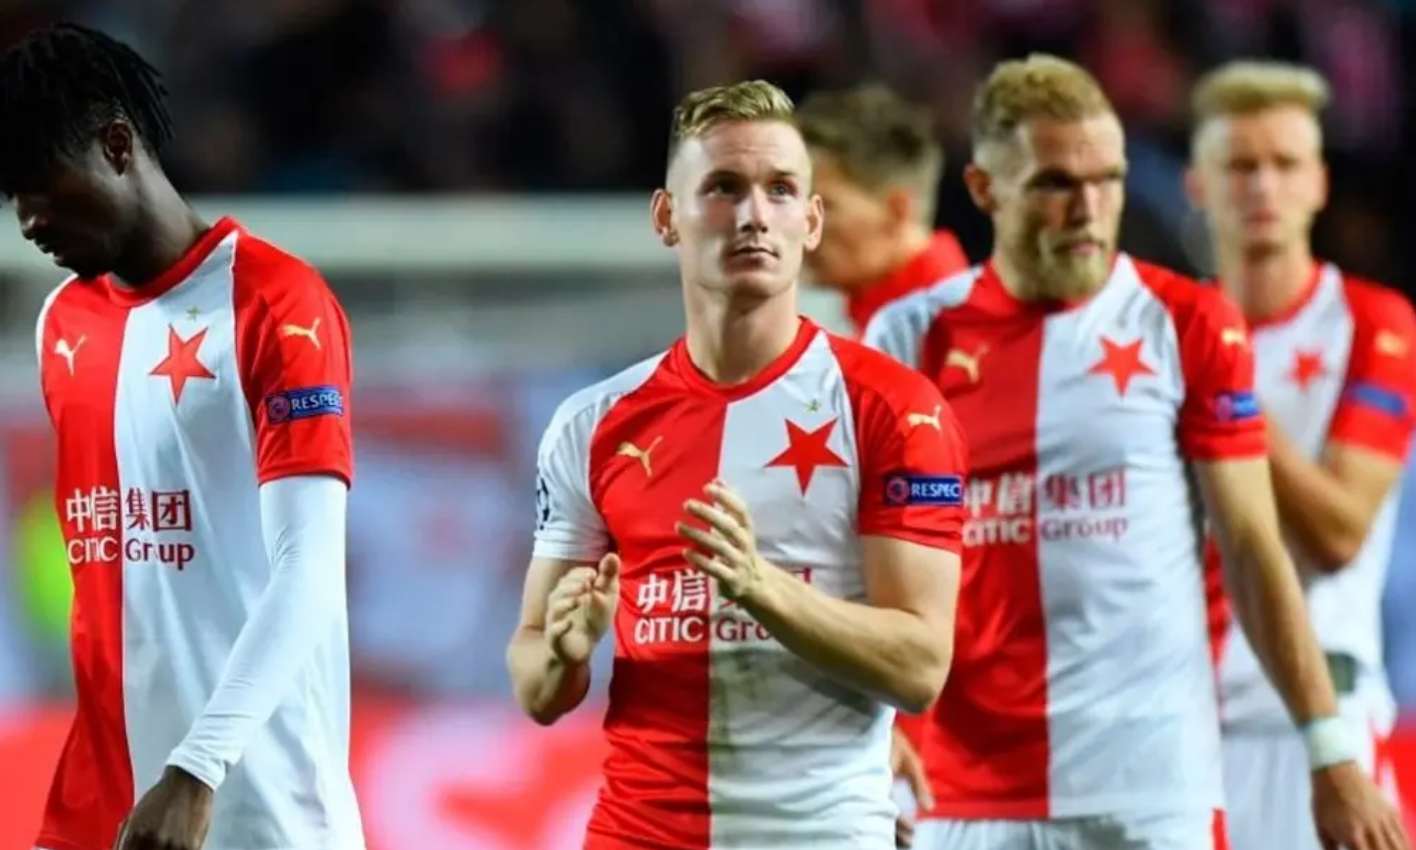 Zorya Luhansk vs Slavia Prague Prediction and Betting Tips